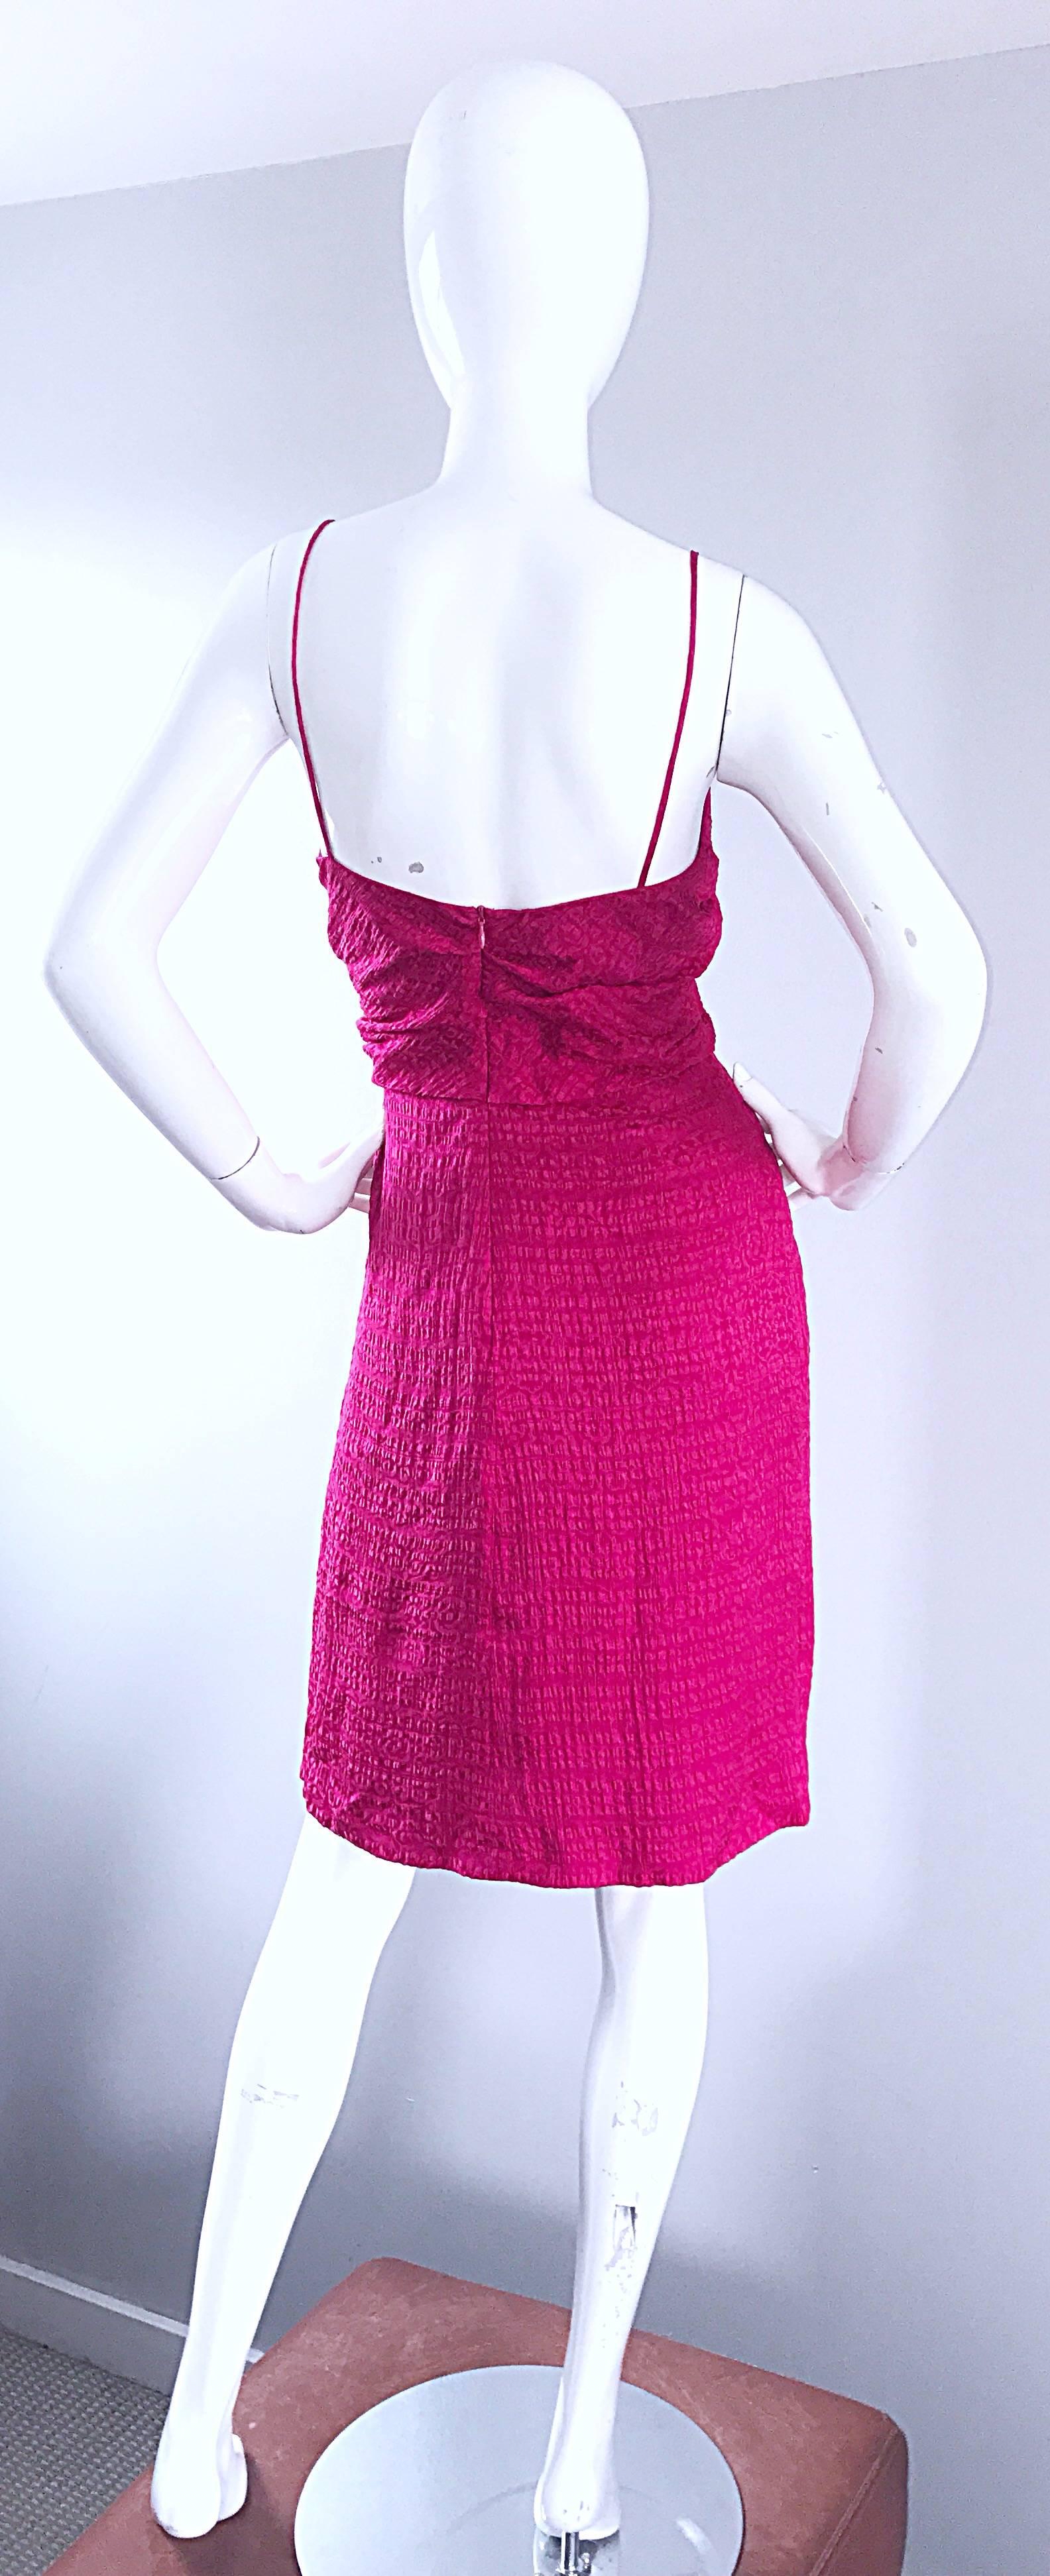 giorgio armani pink dress